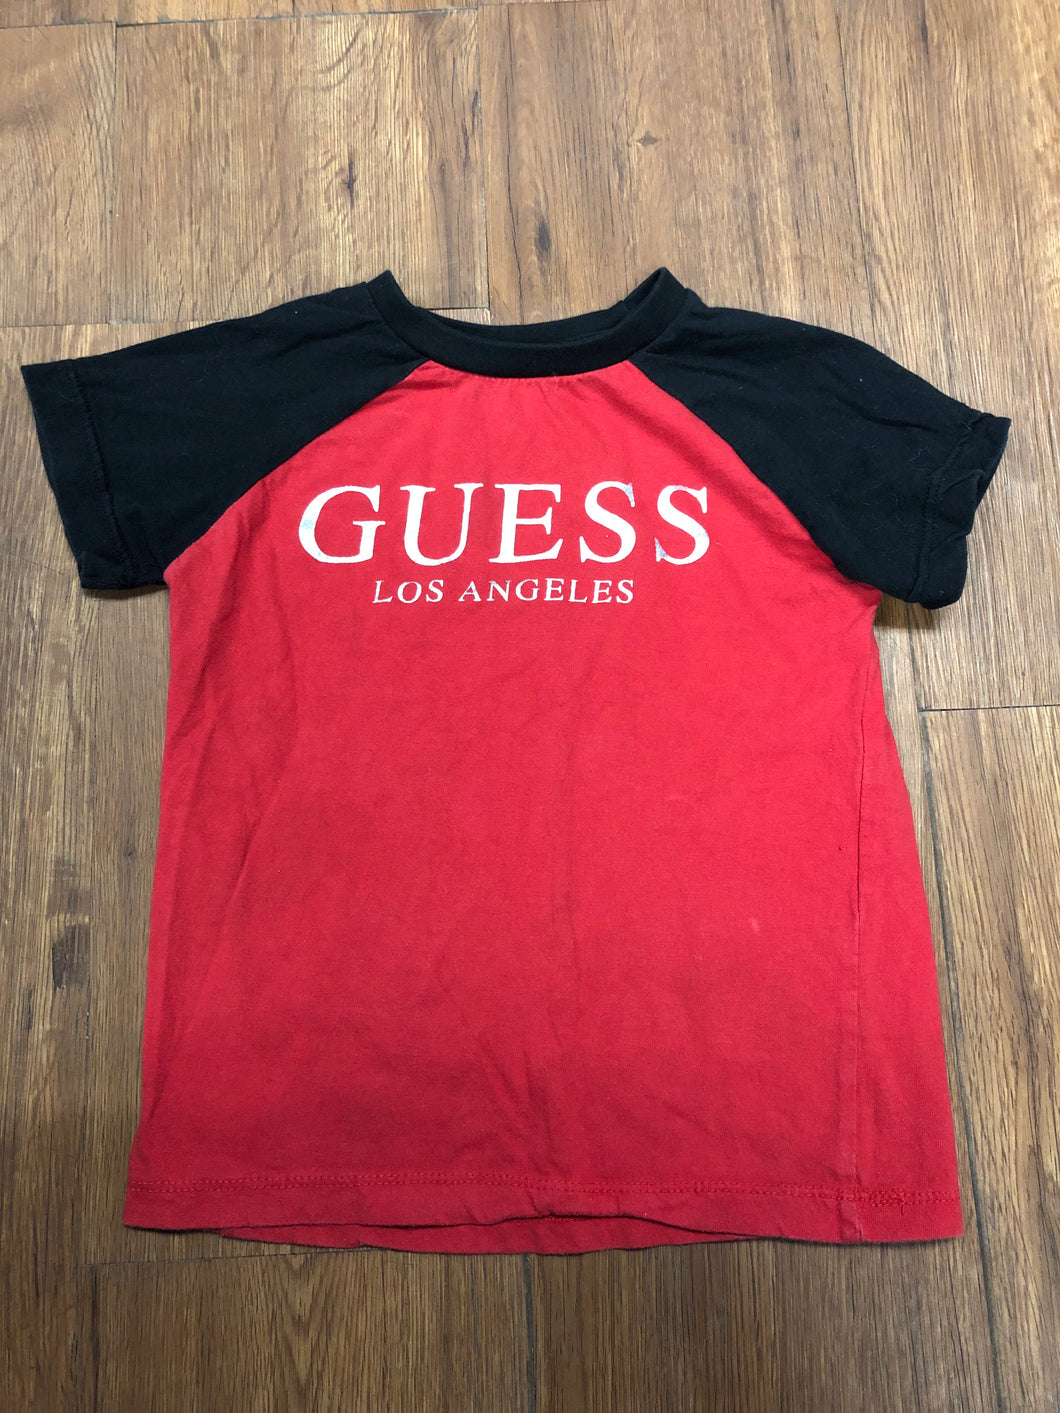 Size 4T Guess Shirt